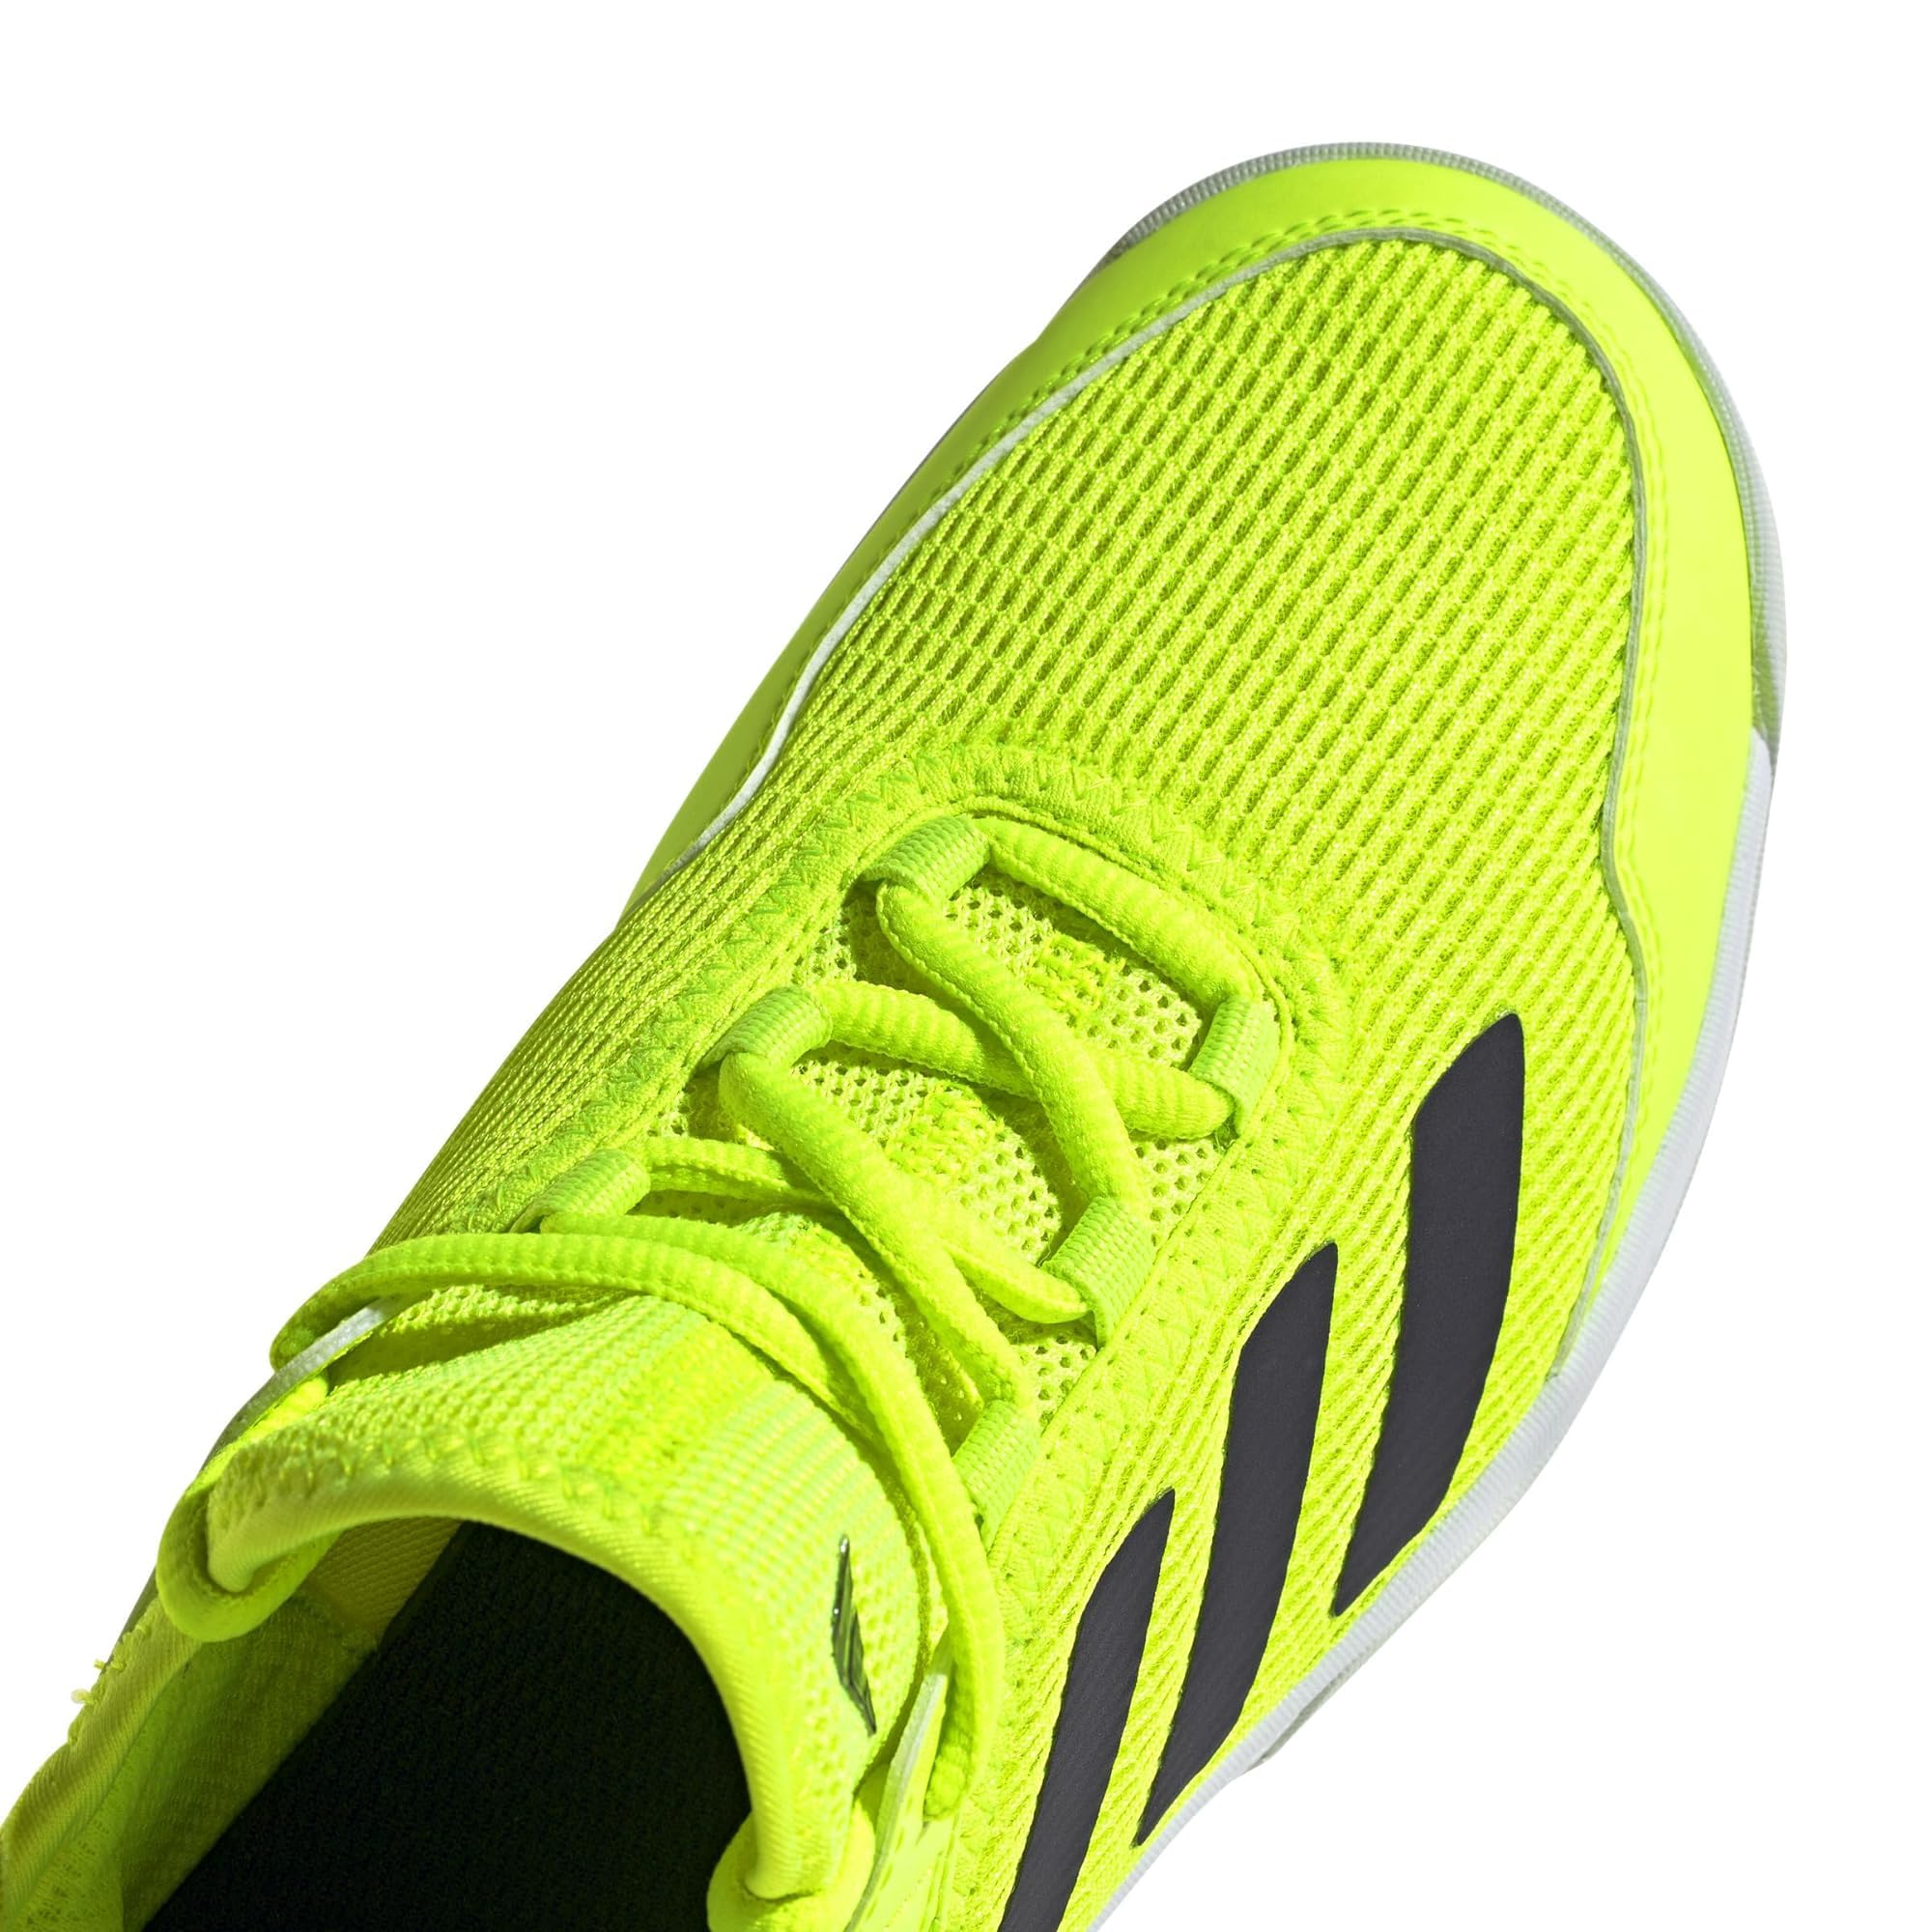 adidas Unisex-Child Ubersonic 4 Tennis Shoe